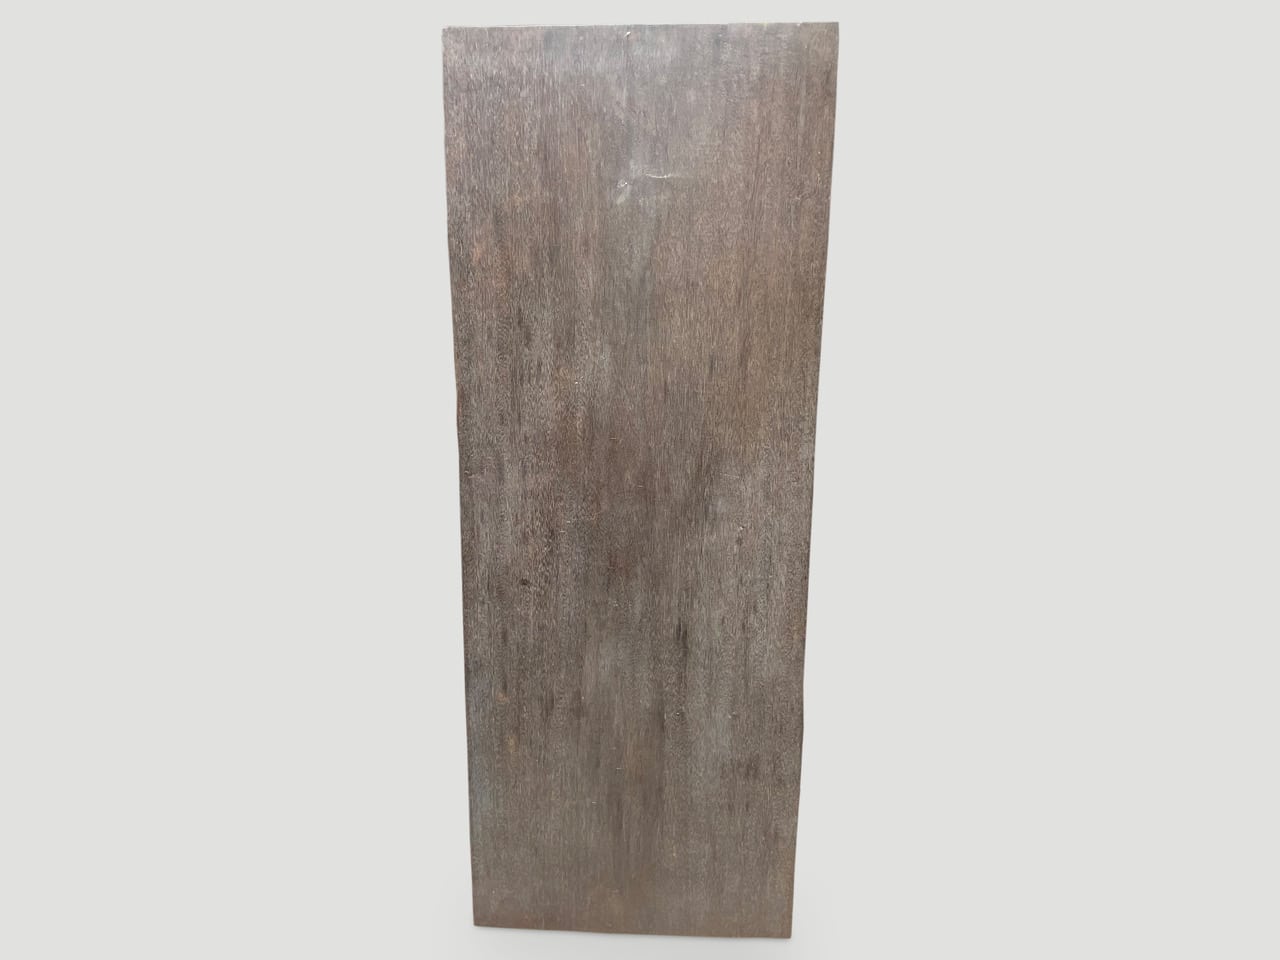 Nias wood panel